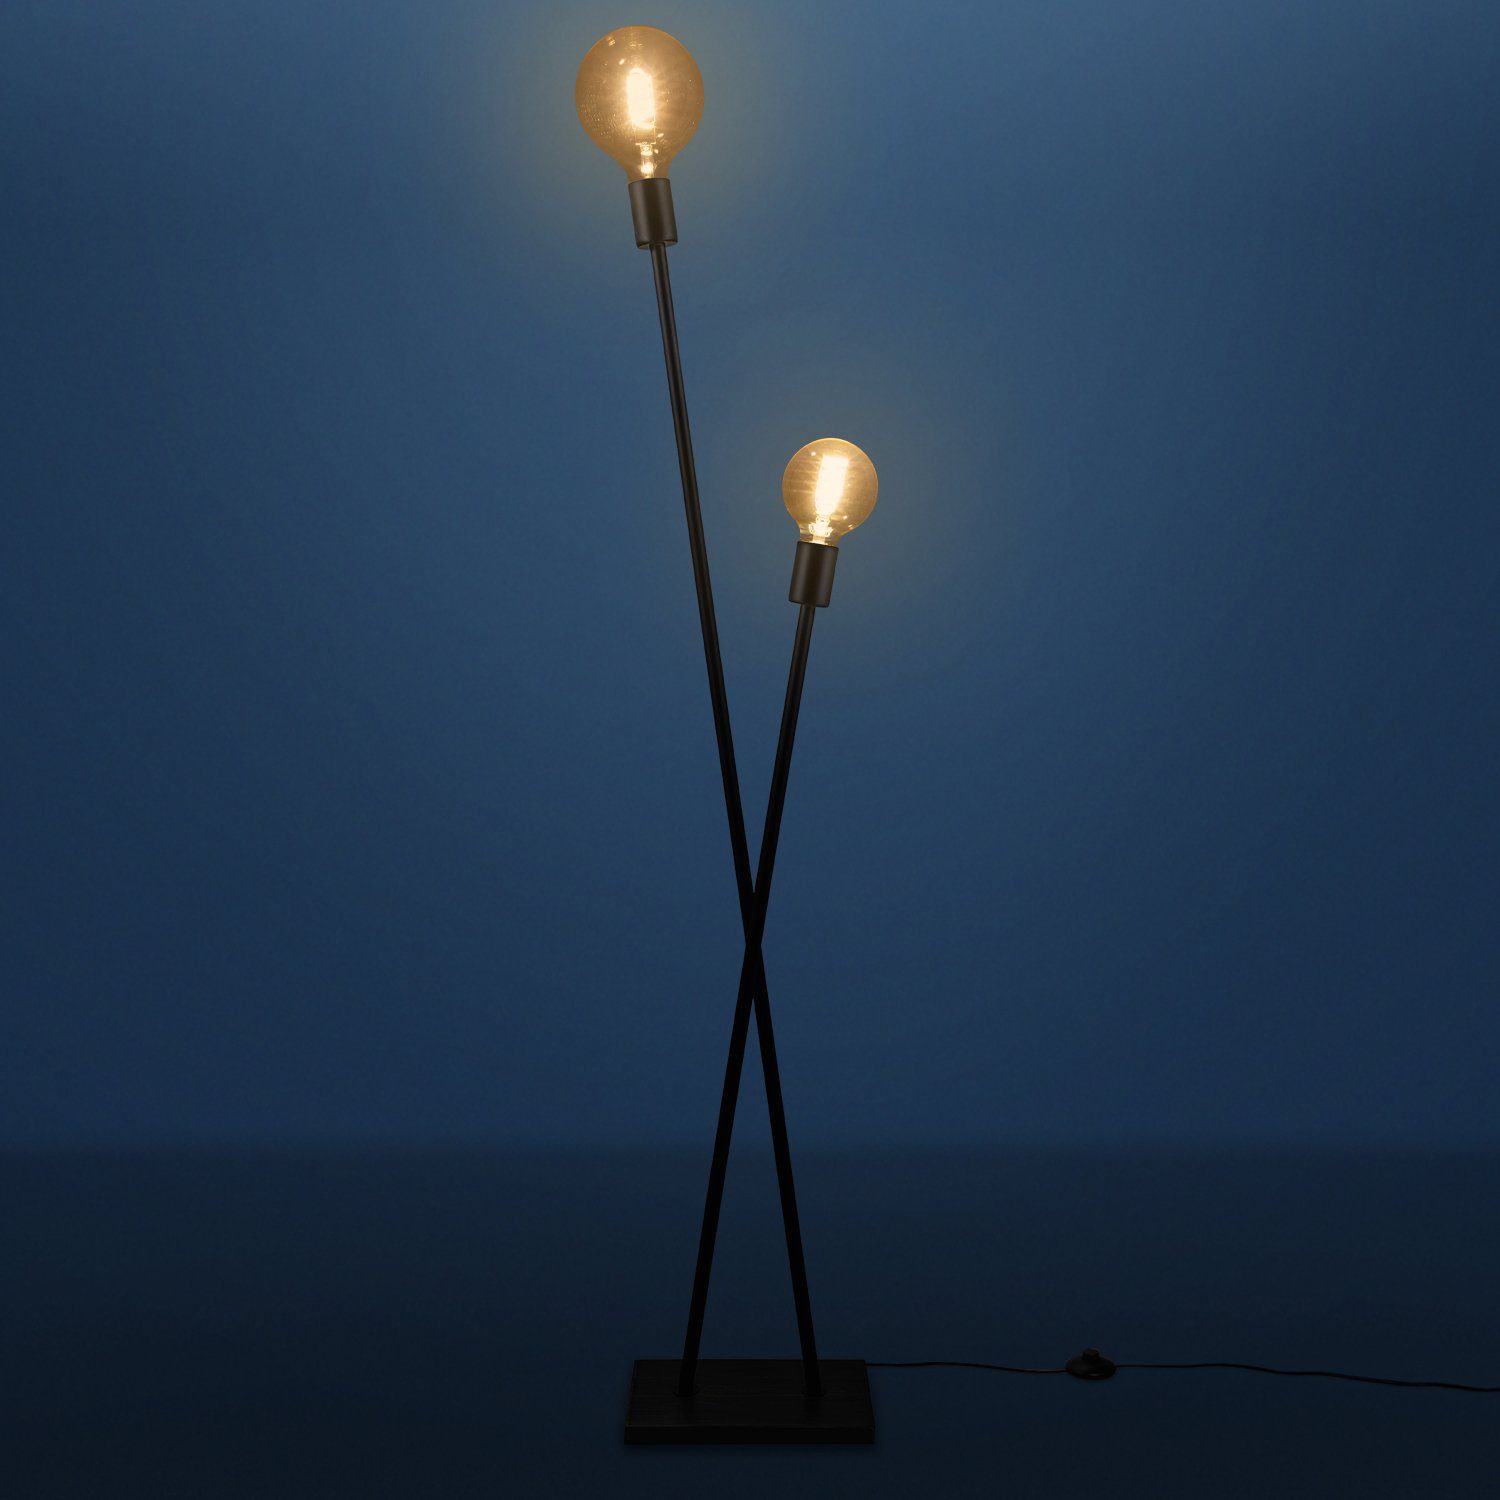 ohne Wohnzimmer Home IKS, Leuchtmittel, Retro Vintage Stehlampe E27 Stehlampe Lampe Industrial LED Design Paco